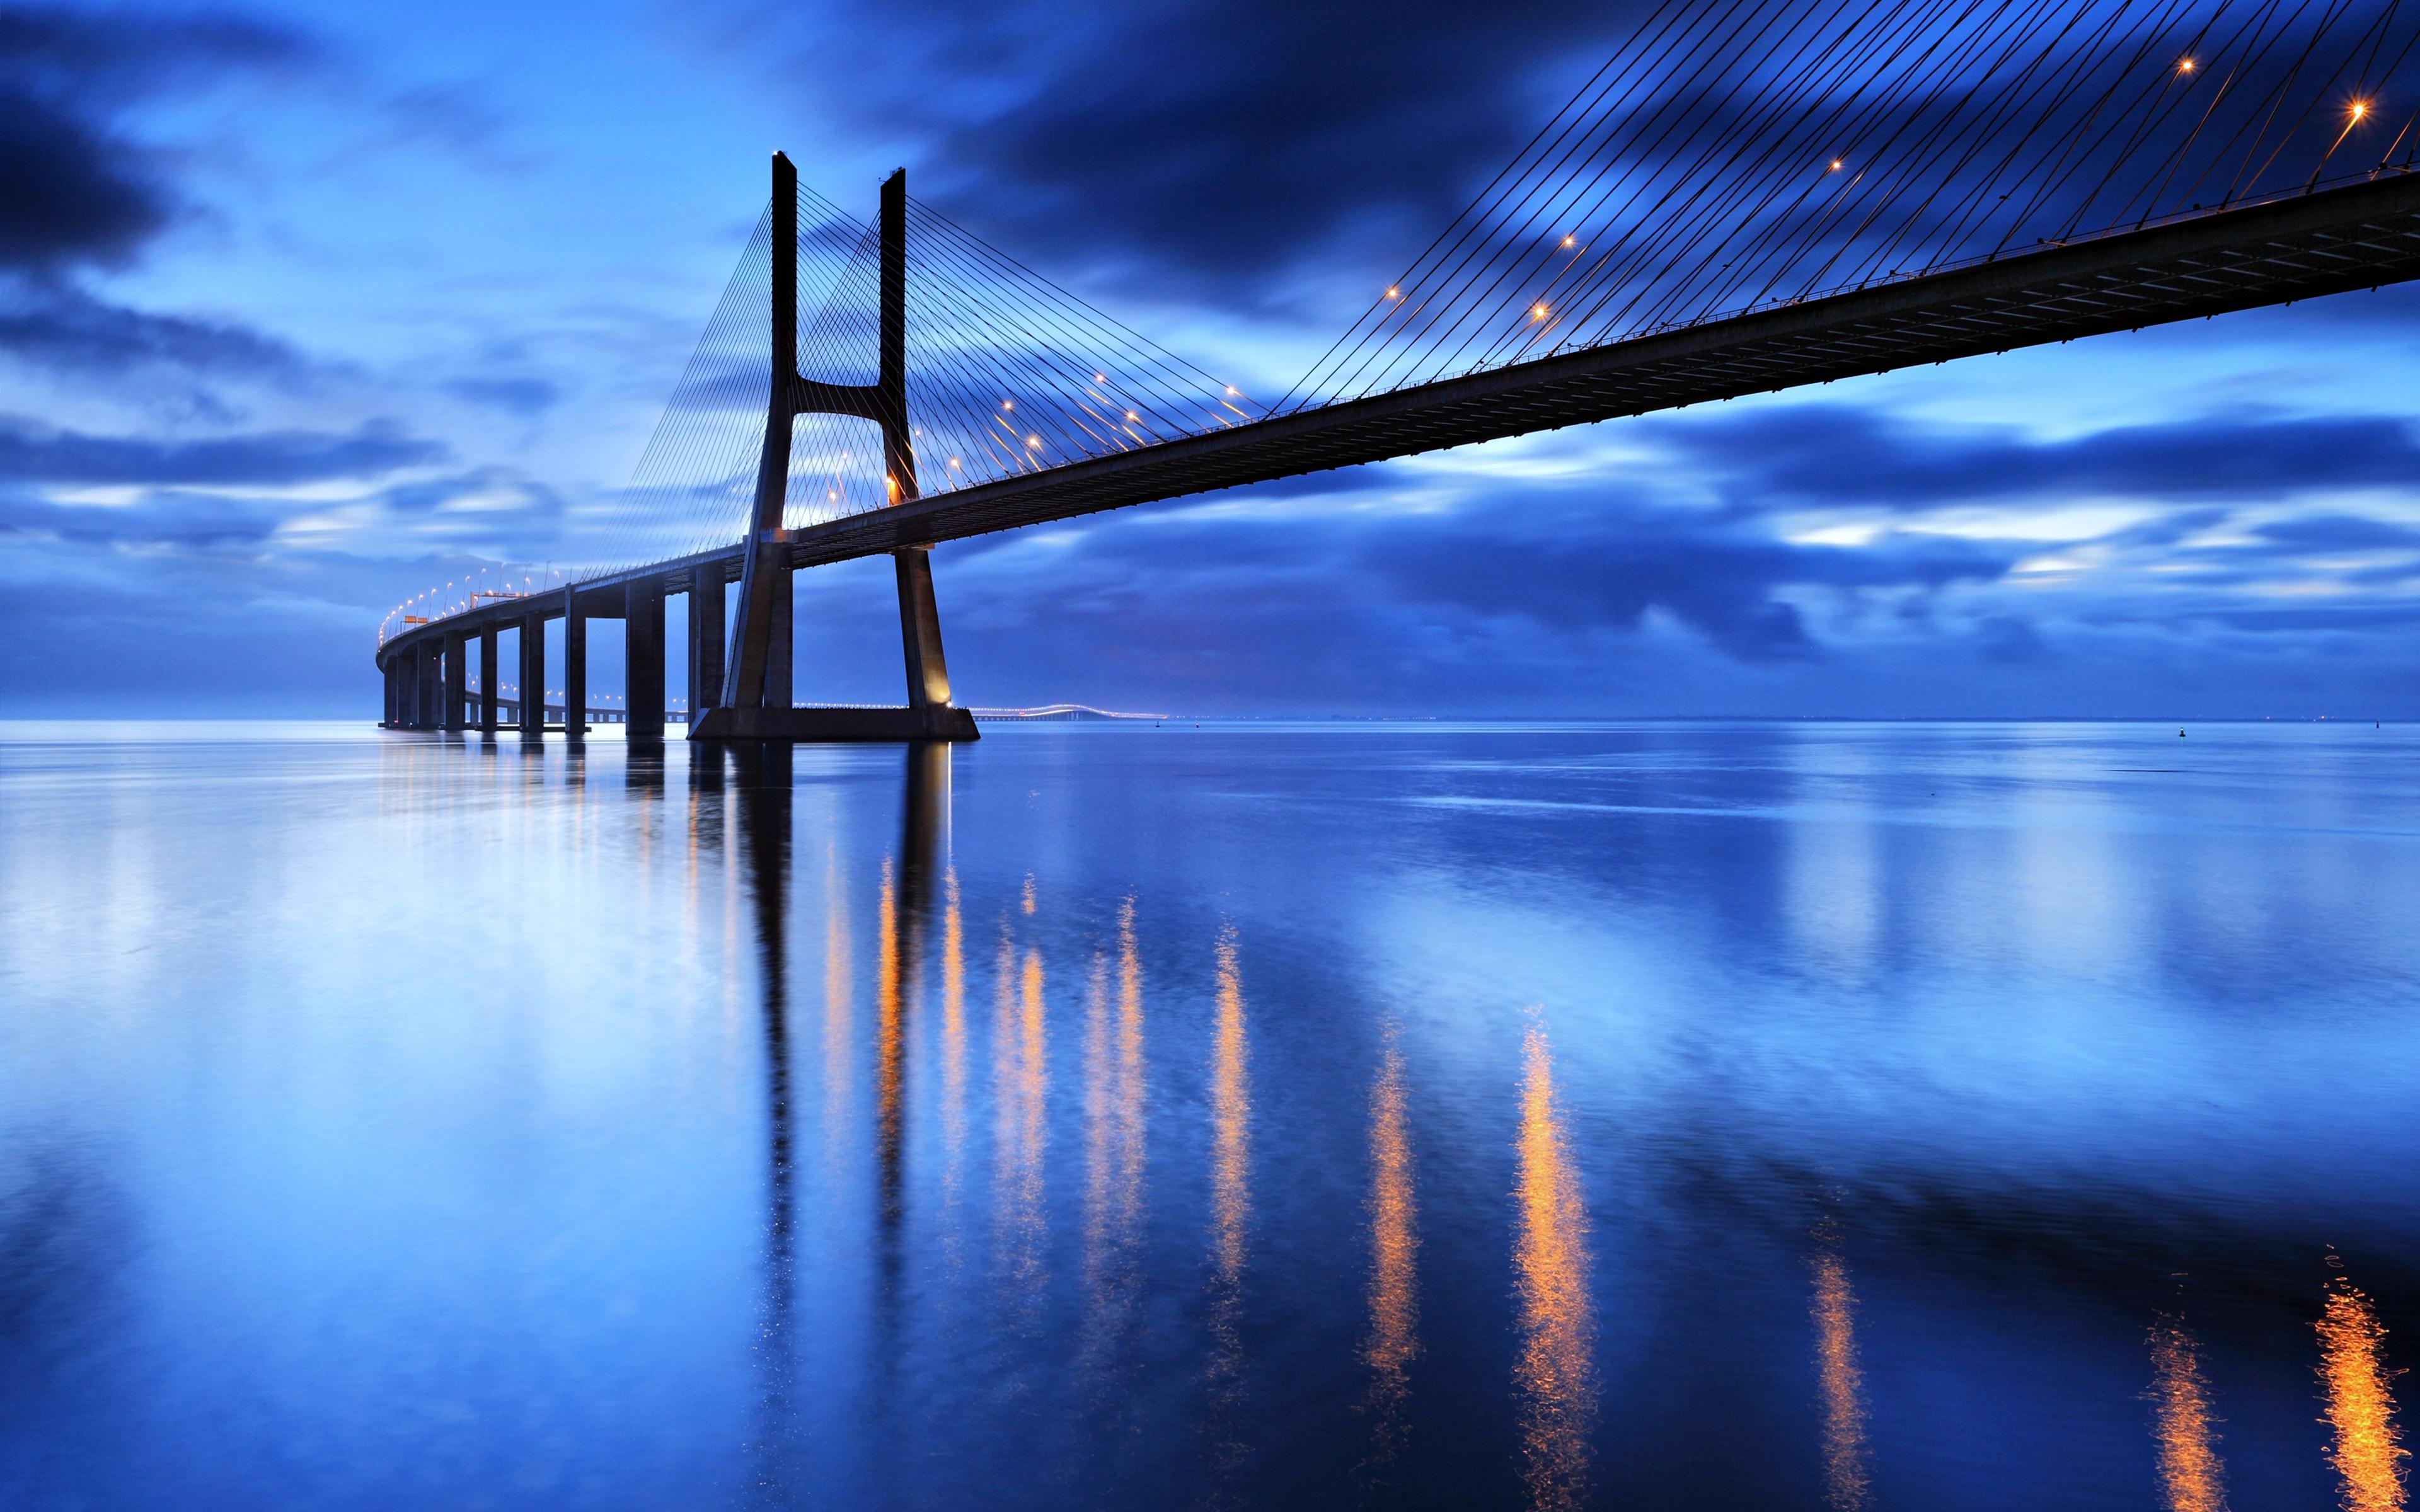 Vasco da Gama Bridge 4k Ultra HD Wallpaper. Background Image